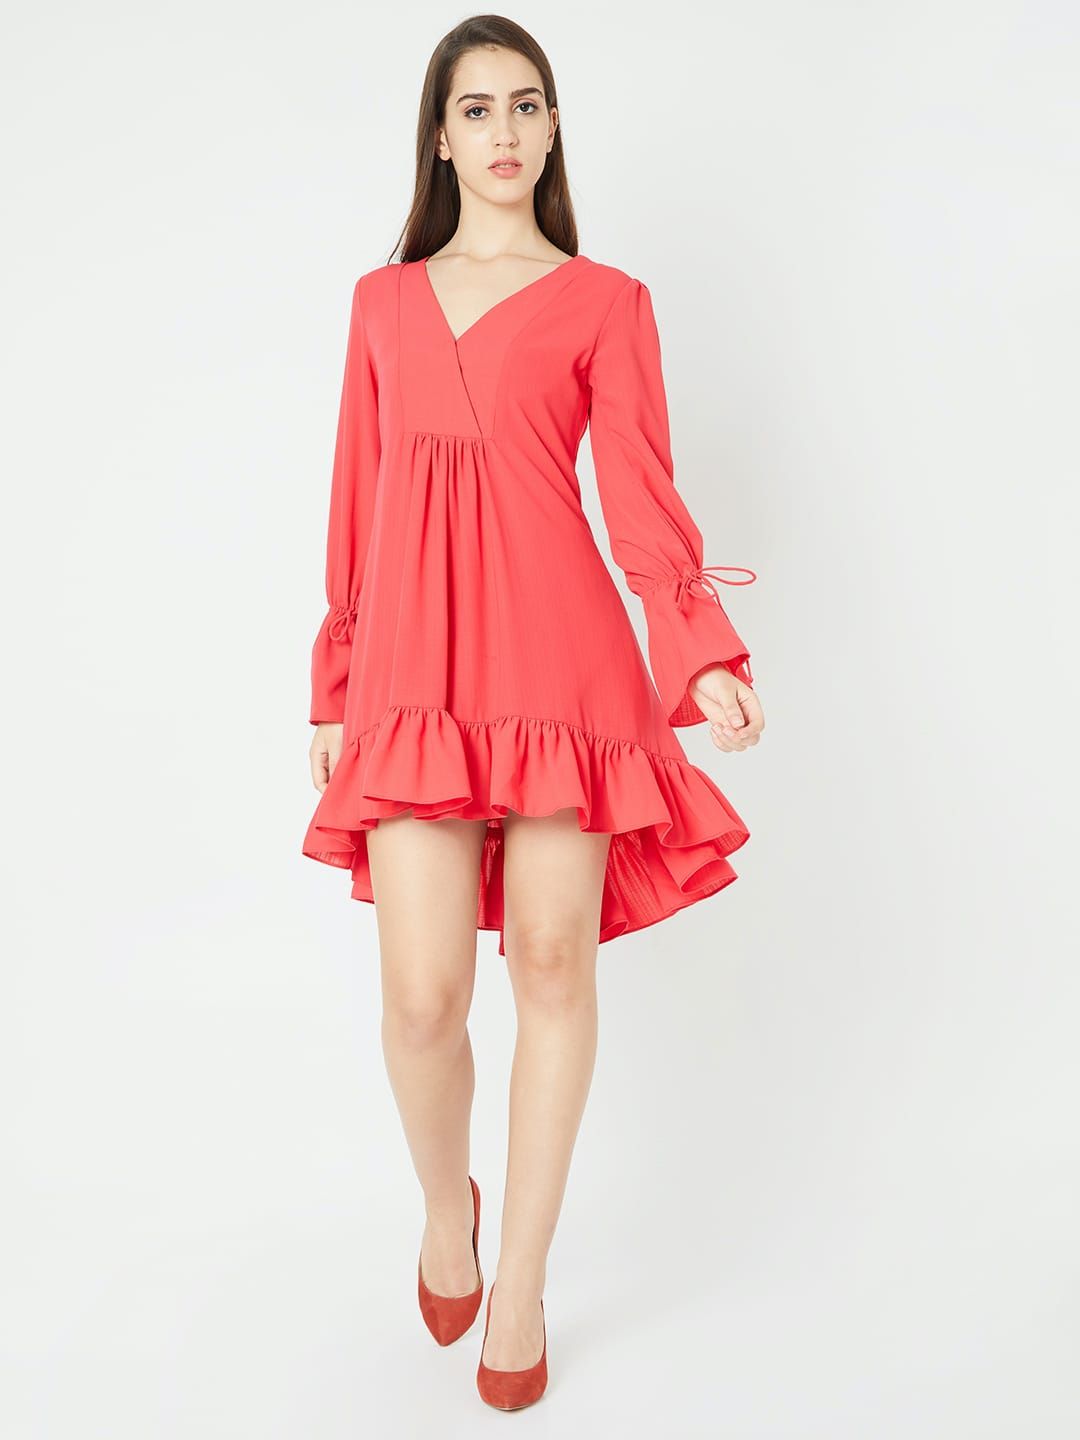 The Jordyn Dresses for Women - Reema Anand Label